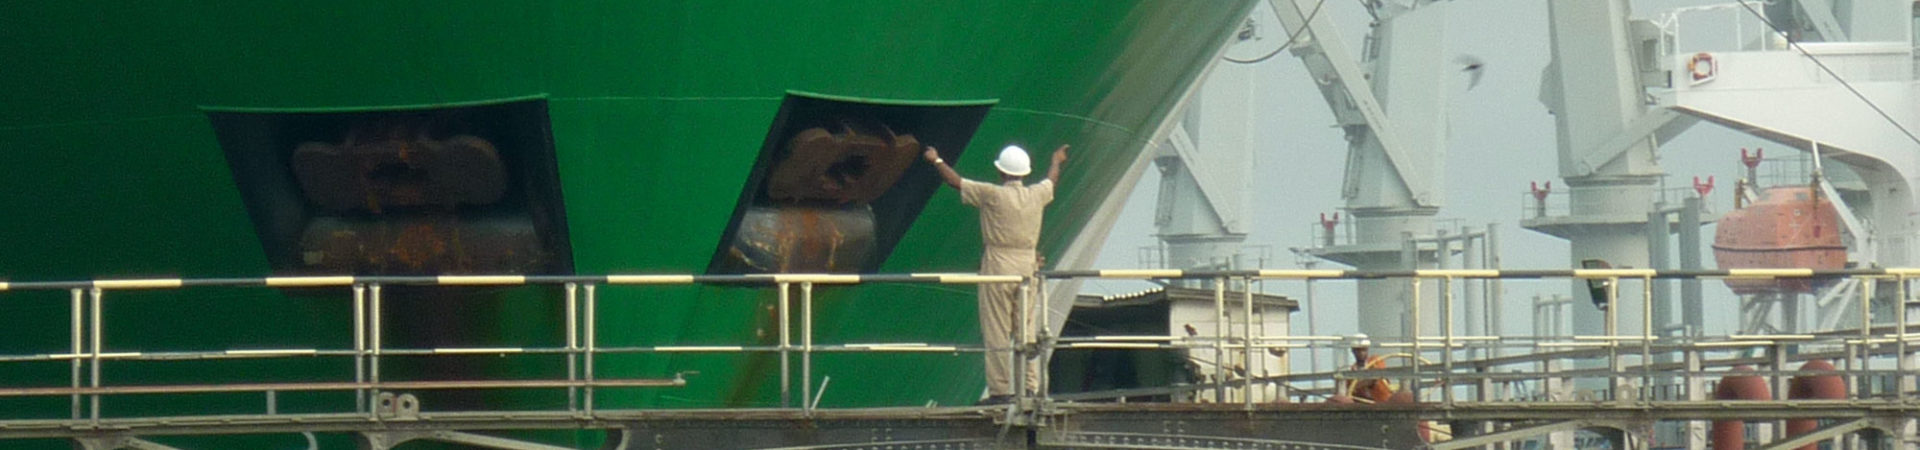 piriou-chantier-naval-shipyard-03